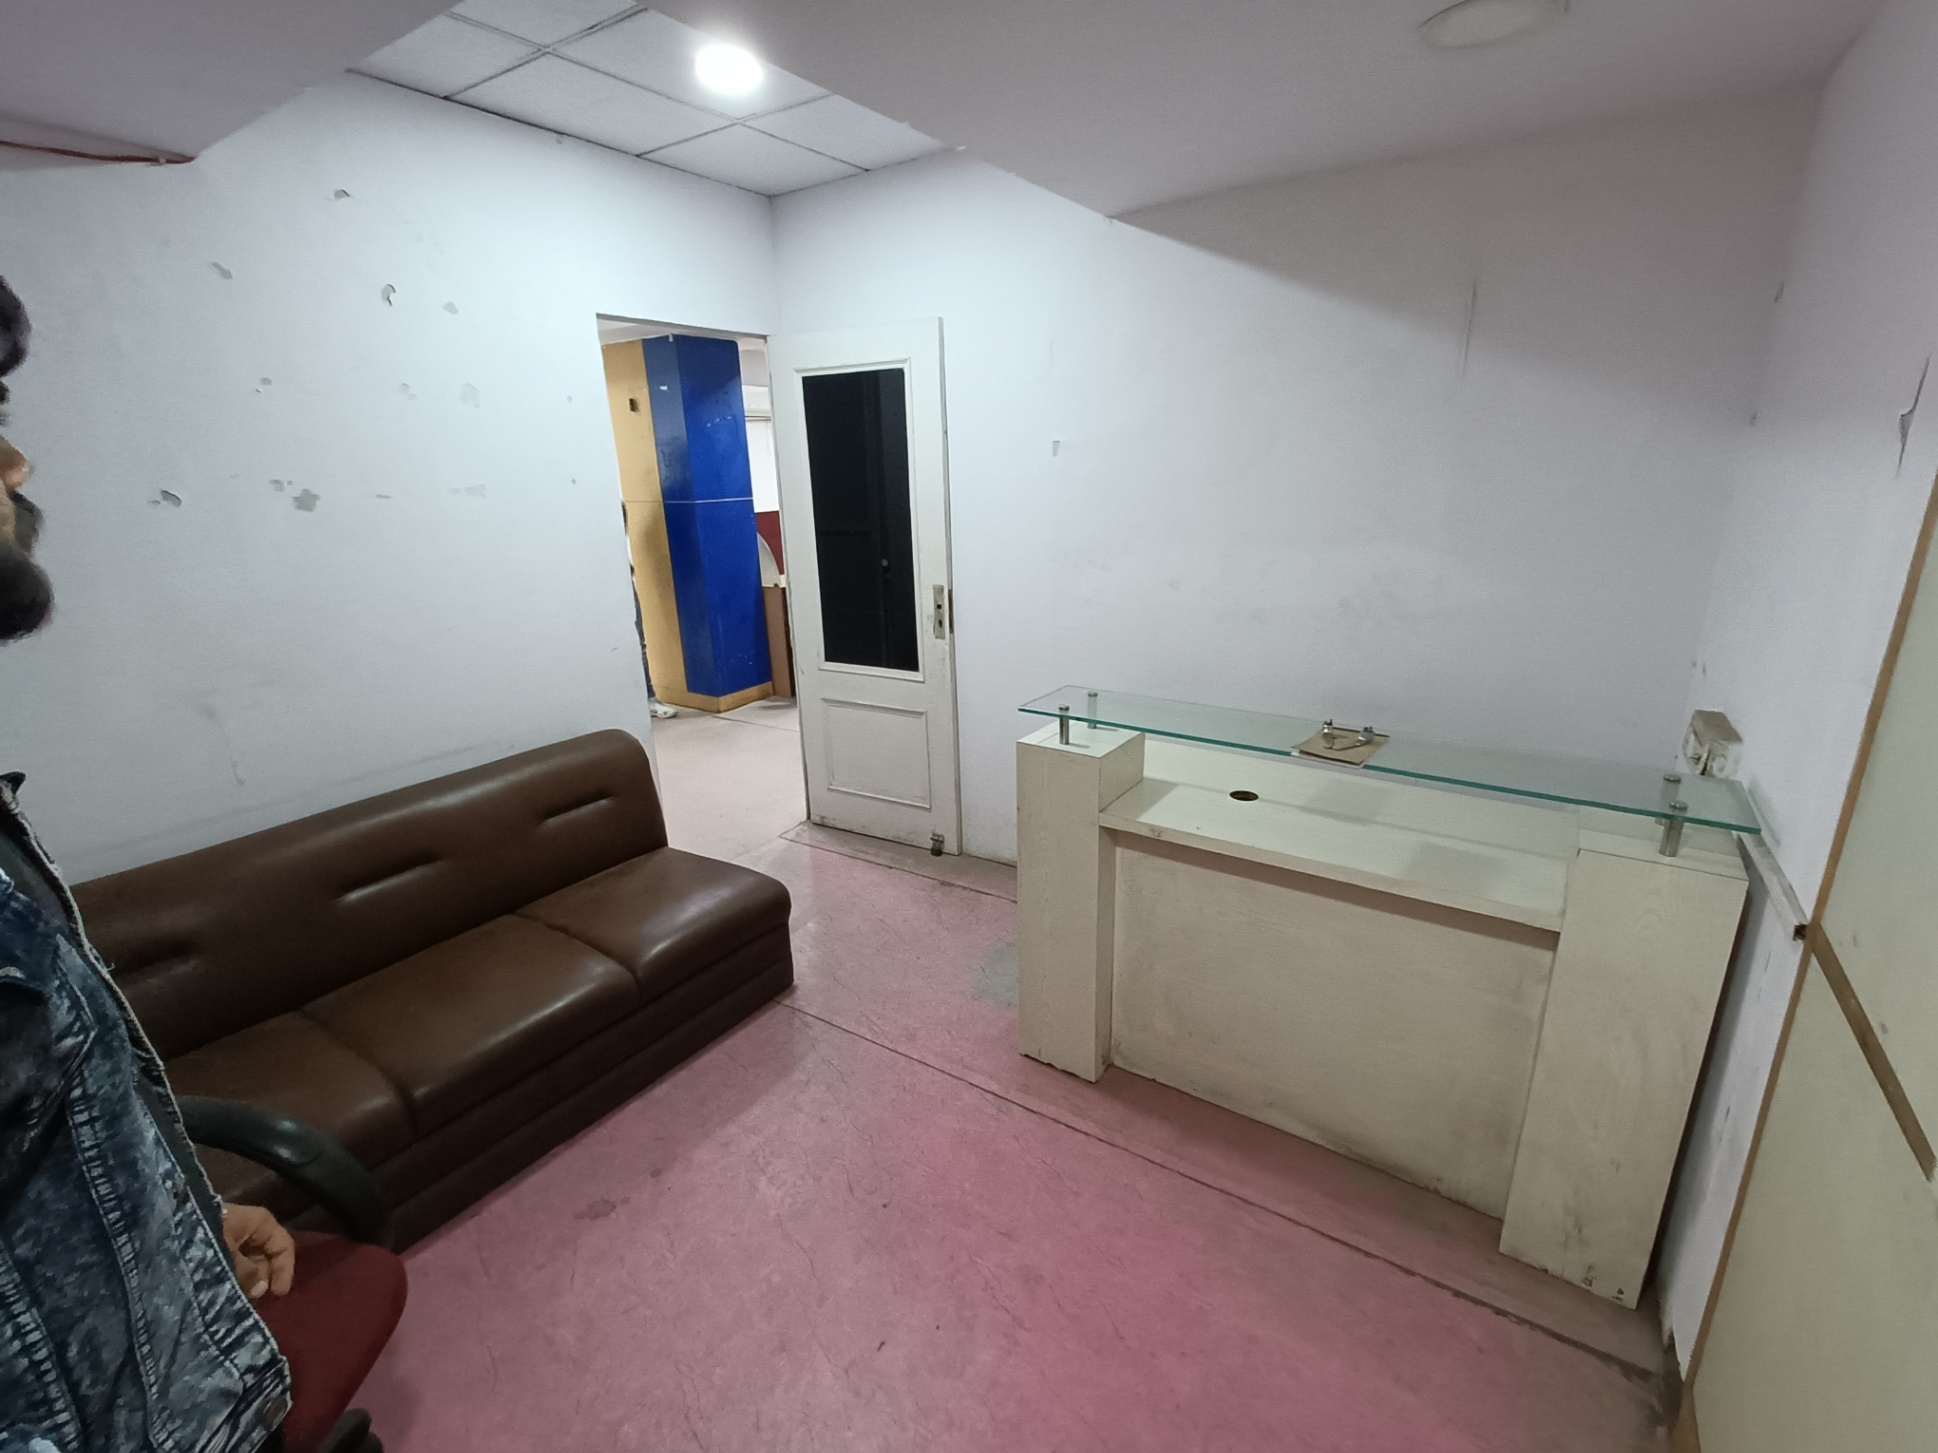 Rent Office/ Shop, 100 sq ft carpet area, Furnished for rent @Noida sector 6